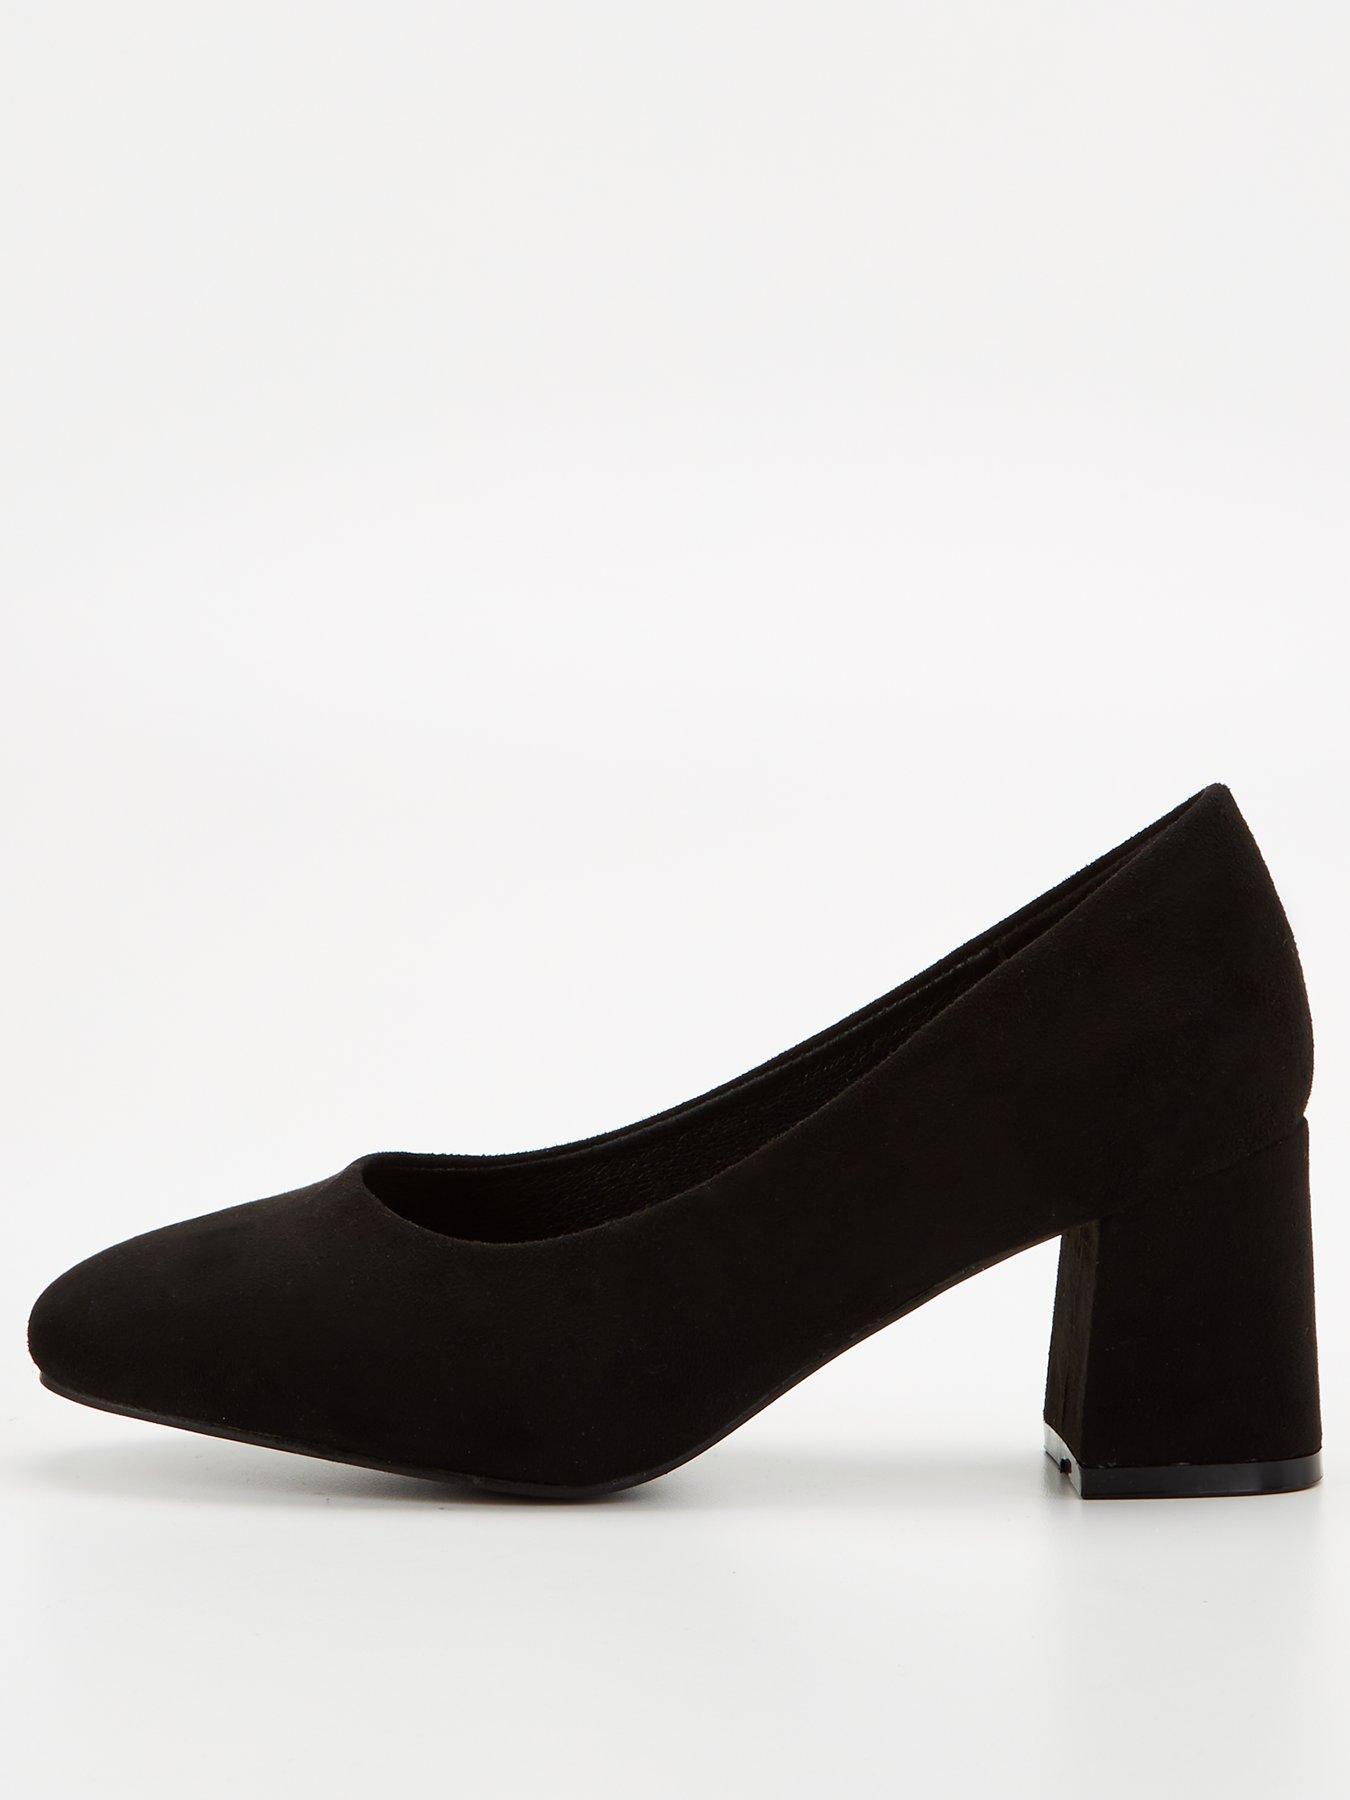 High Heels Platform Wedge Sandal Open Toe Fashion Cross Strap Wood Grain  Wedge Sexy High Heel Sandals Court Shoes-Black||46